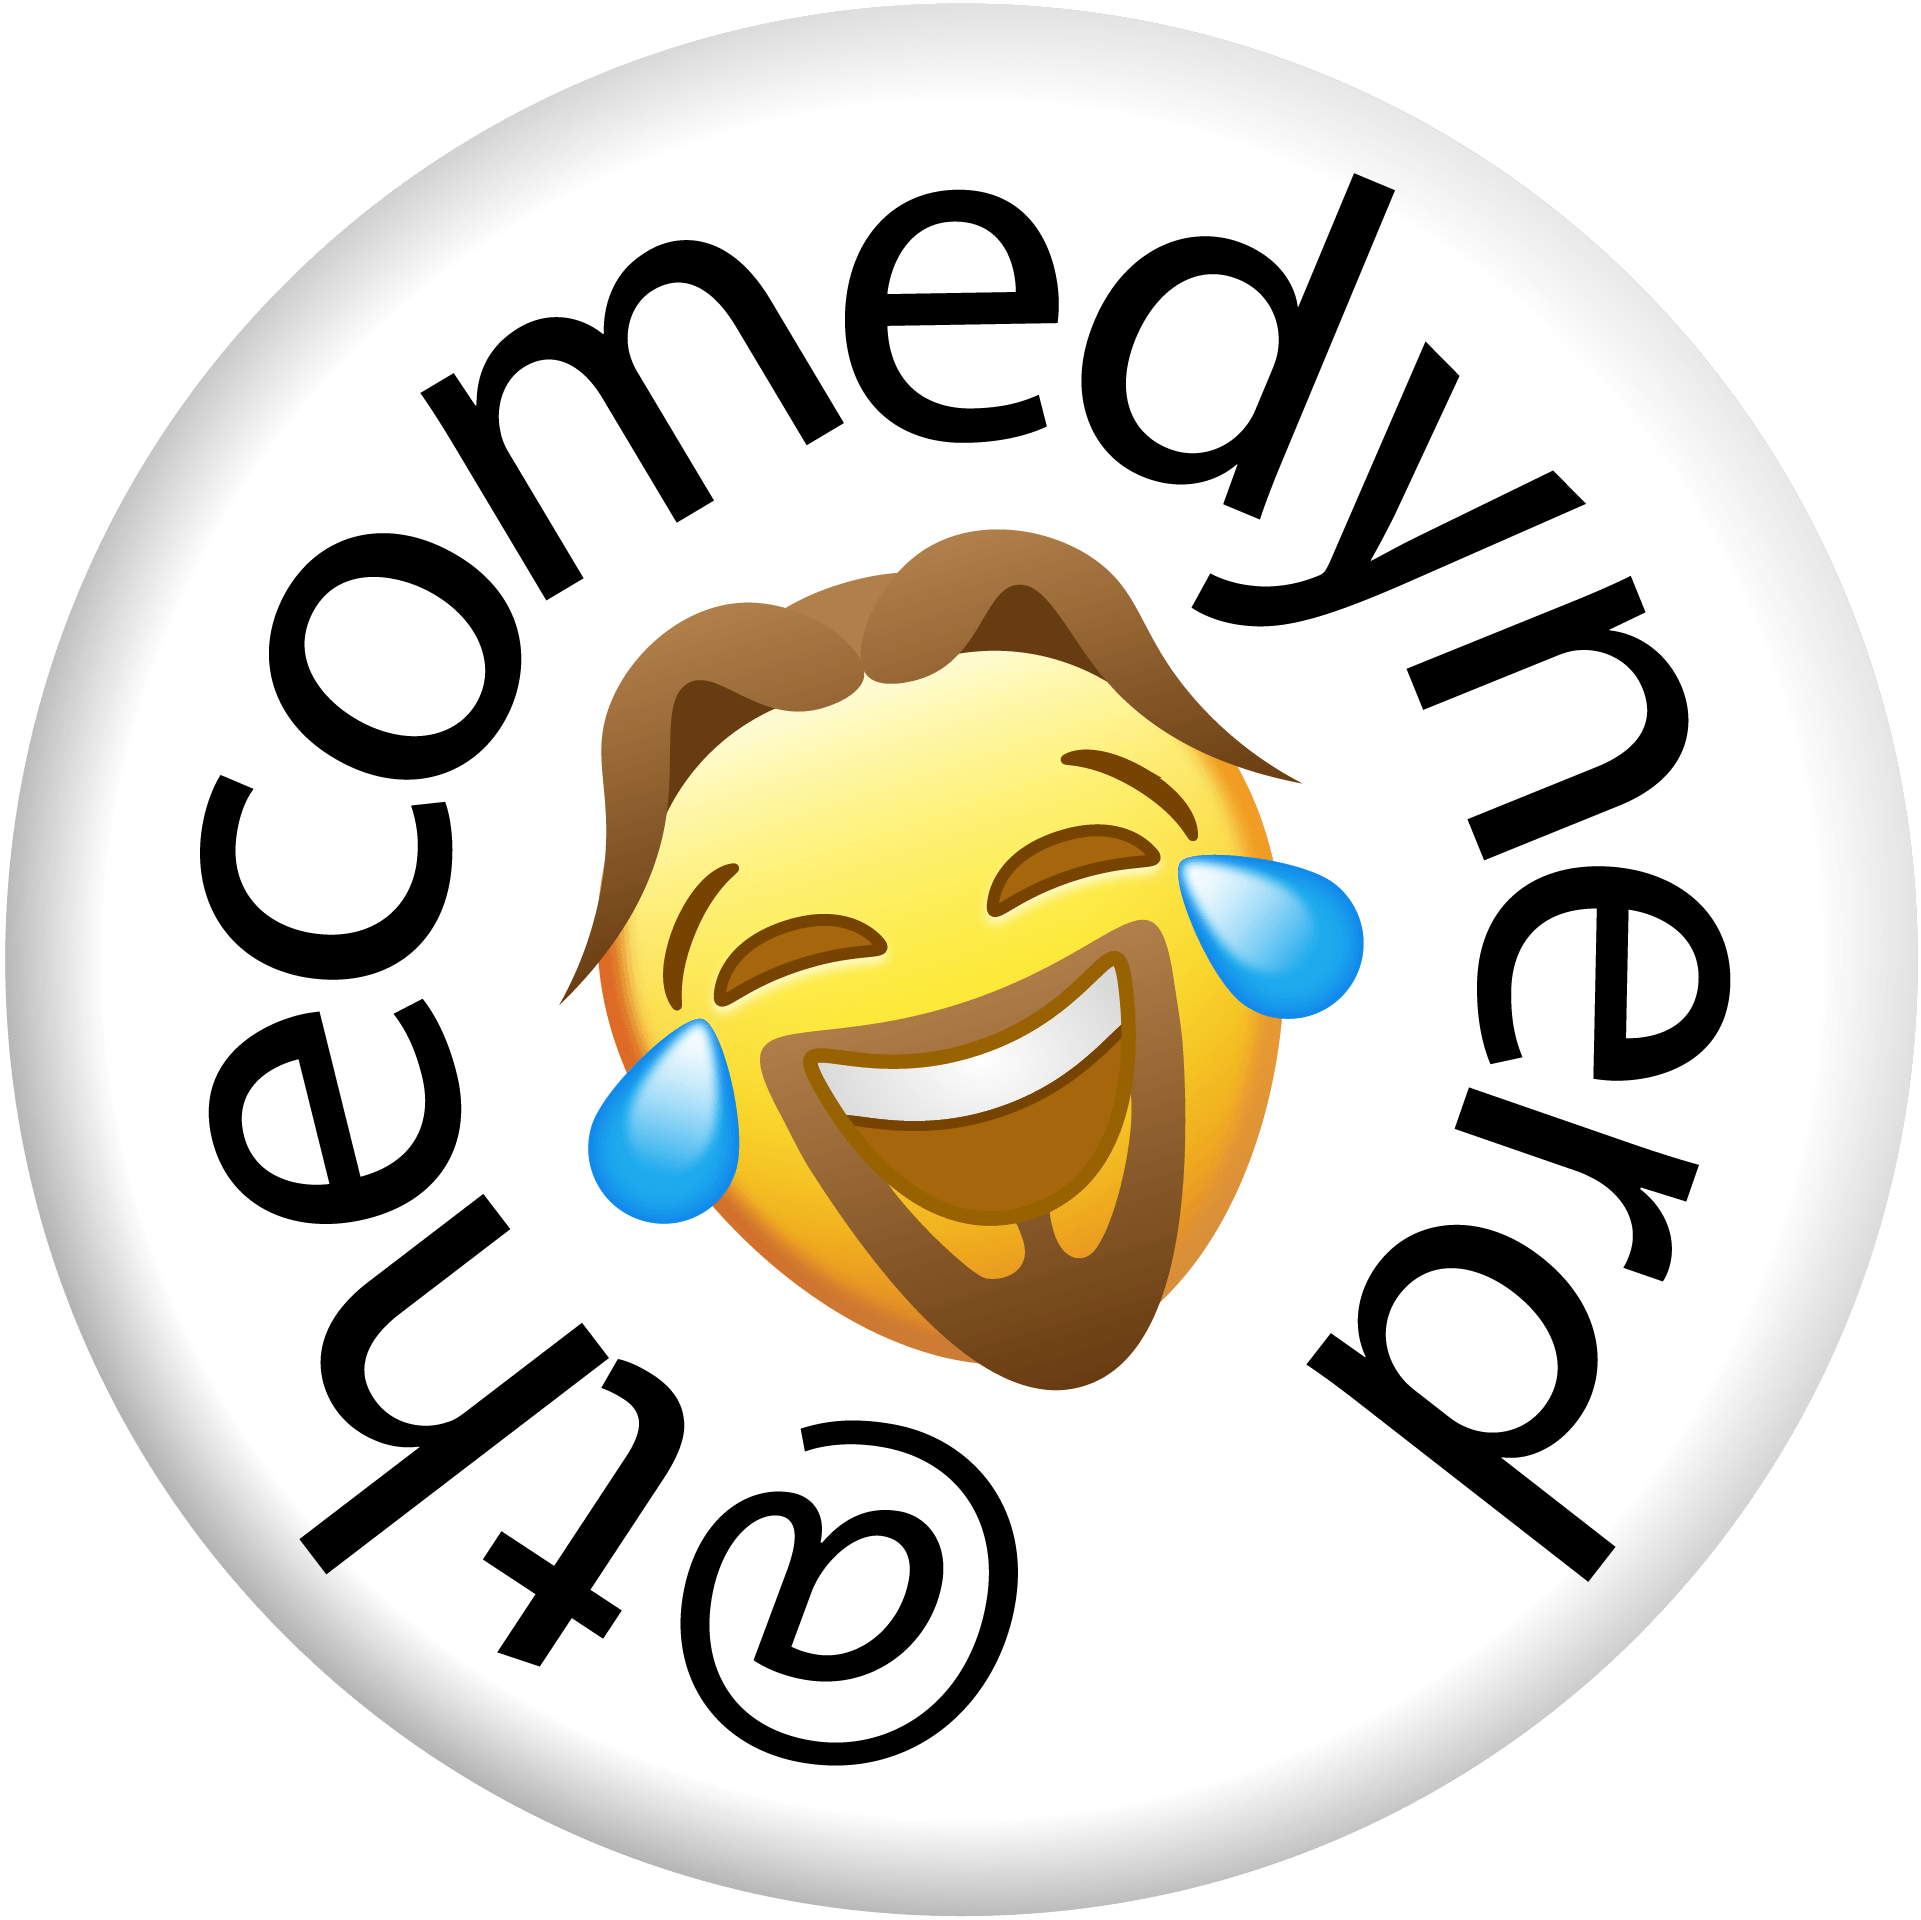 The ComedyNerd